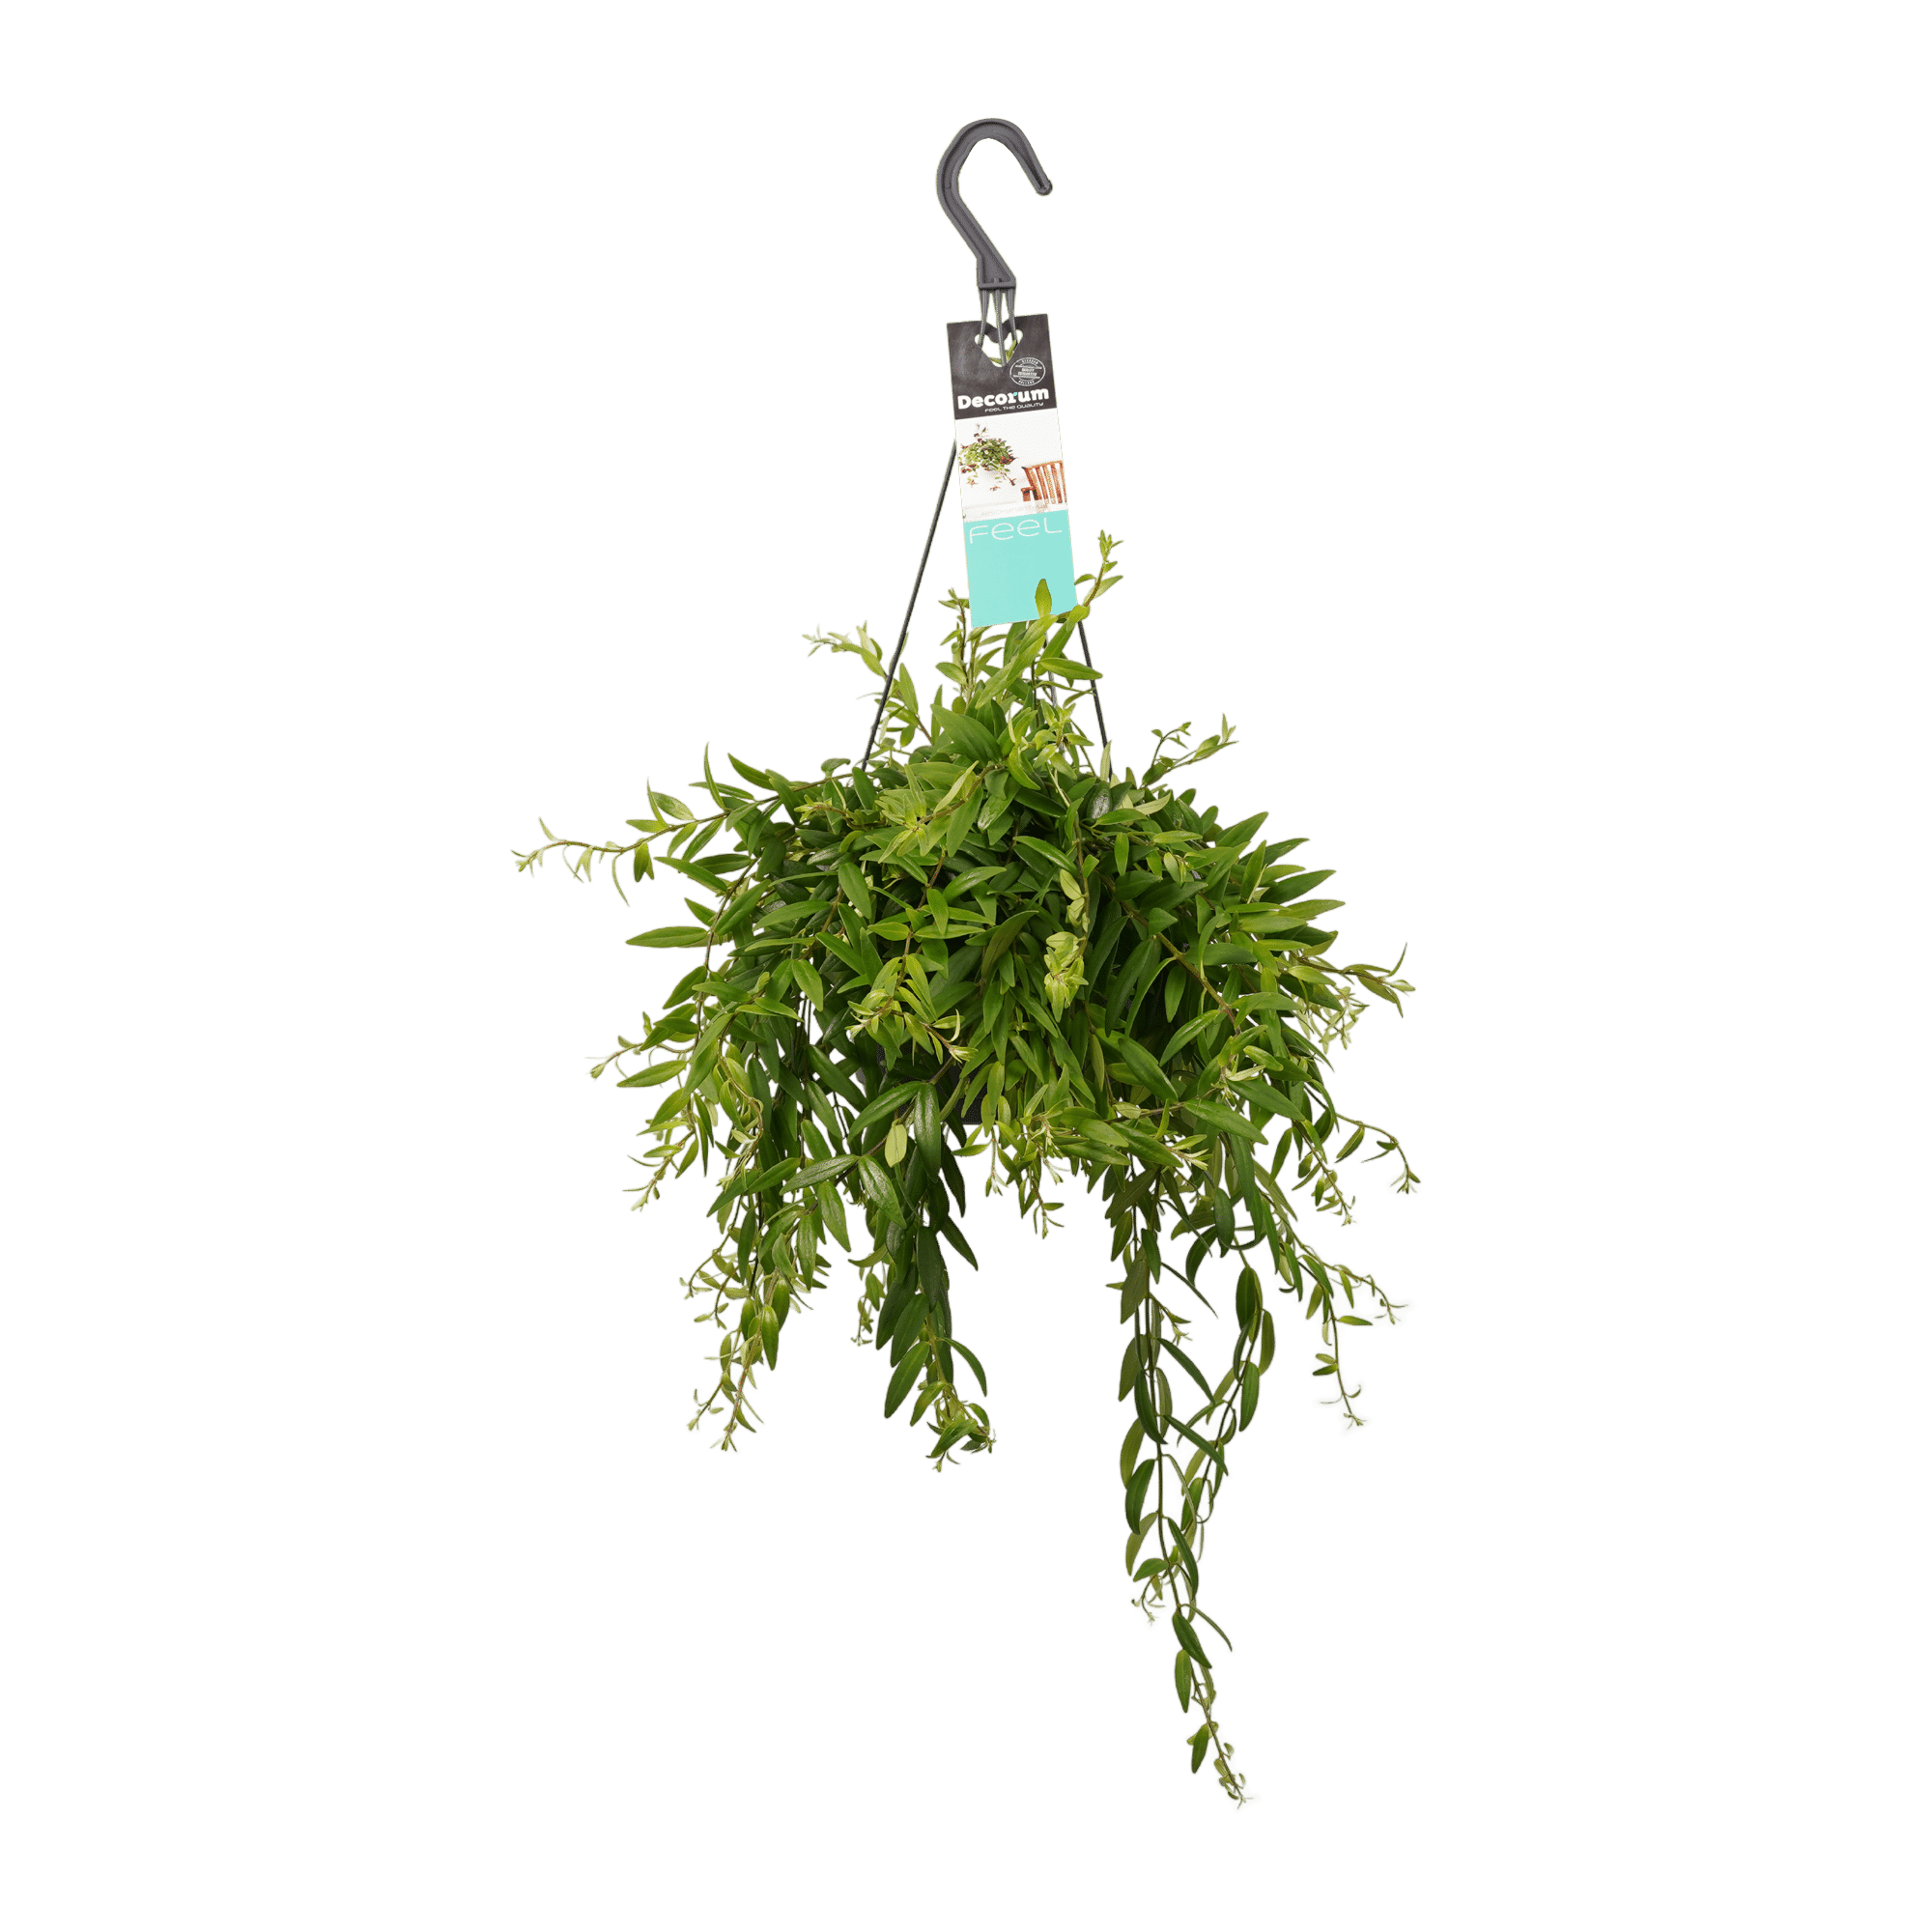 Aeschynanthus hangplant